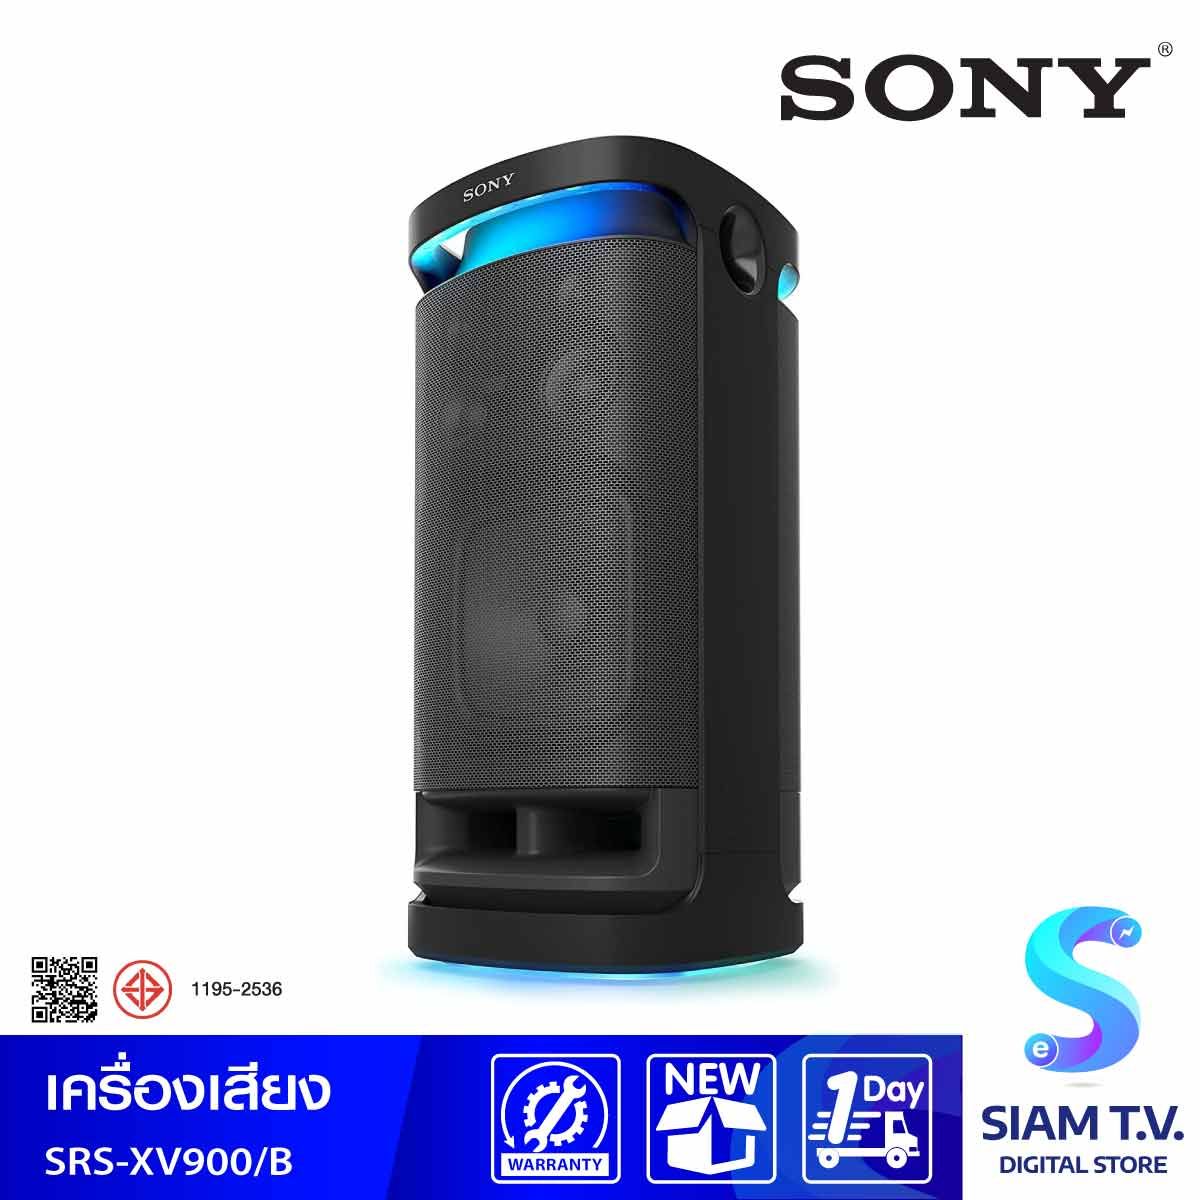 SONY ชุดเครื่องเสียงแบบเคลื่อนย้าย Wireless Portable รุ่น SRS-XV900/B ชุดเครื่องเสียงแบบเคลื่อนย้ายได้